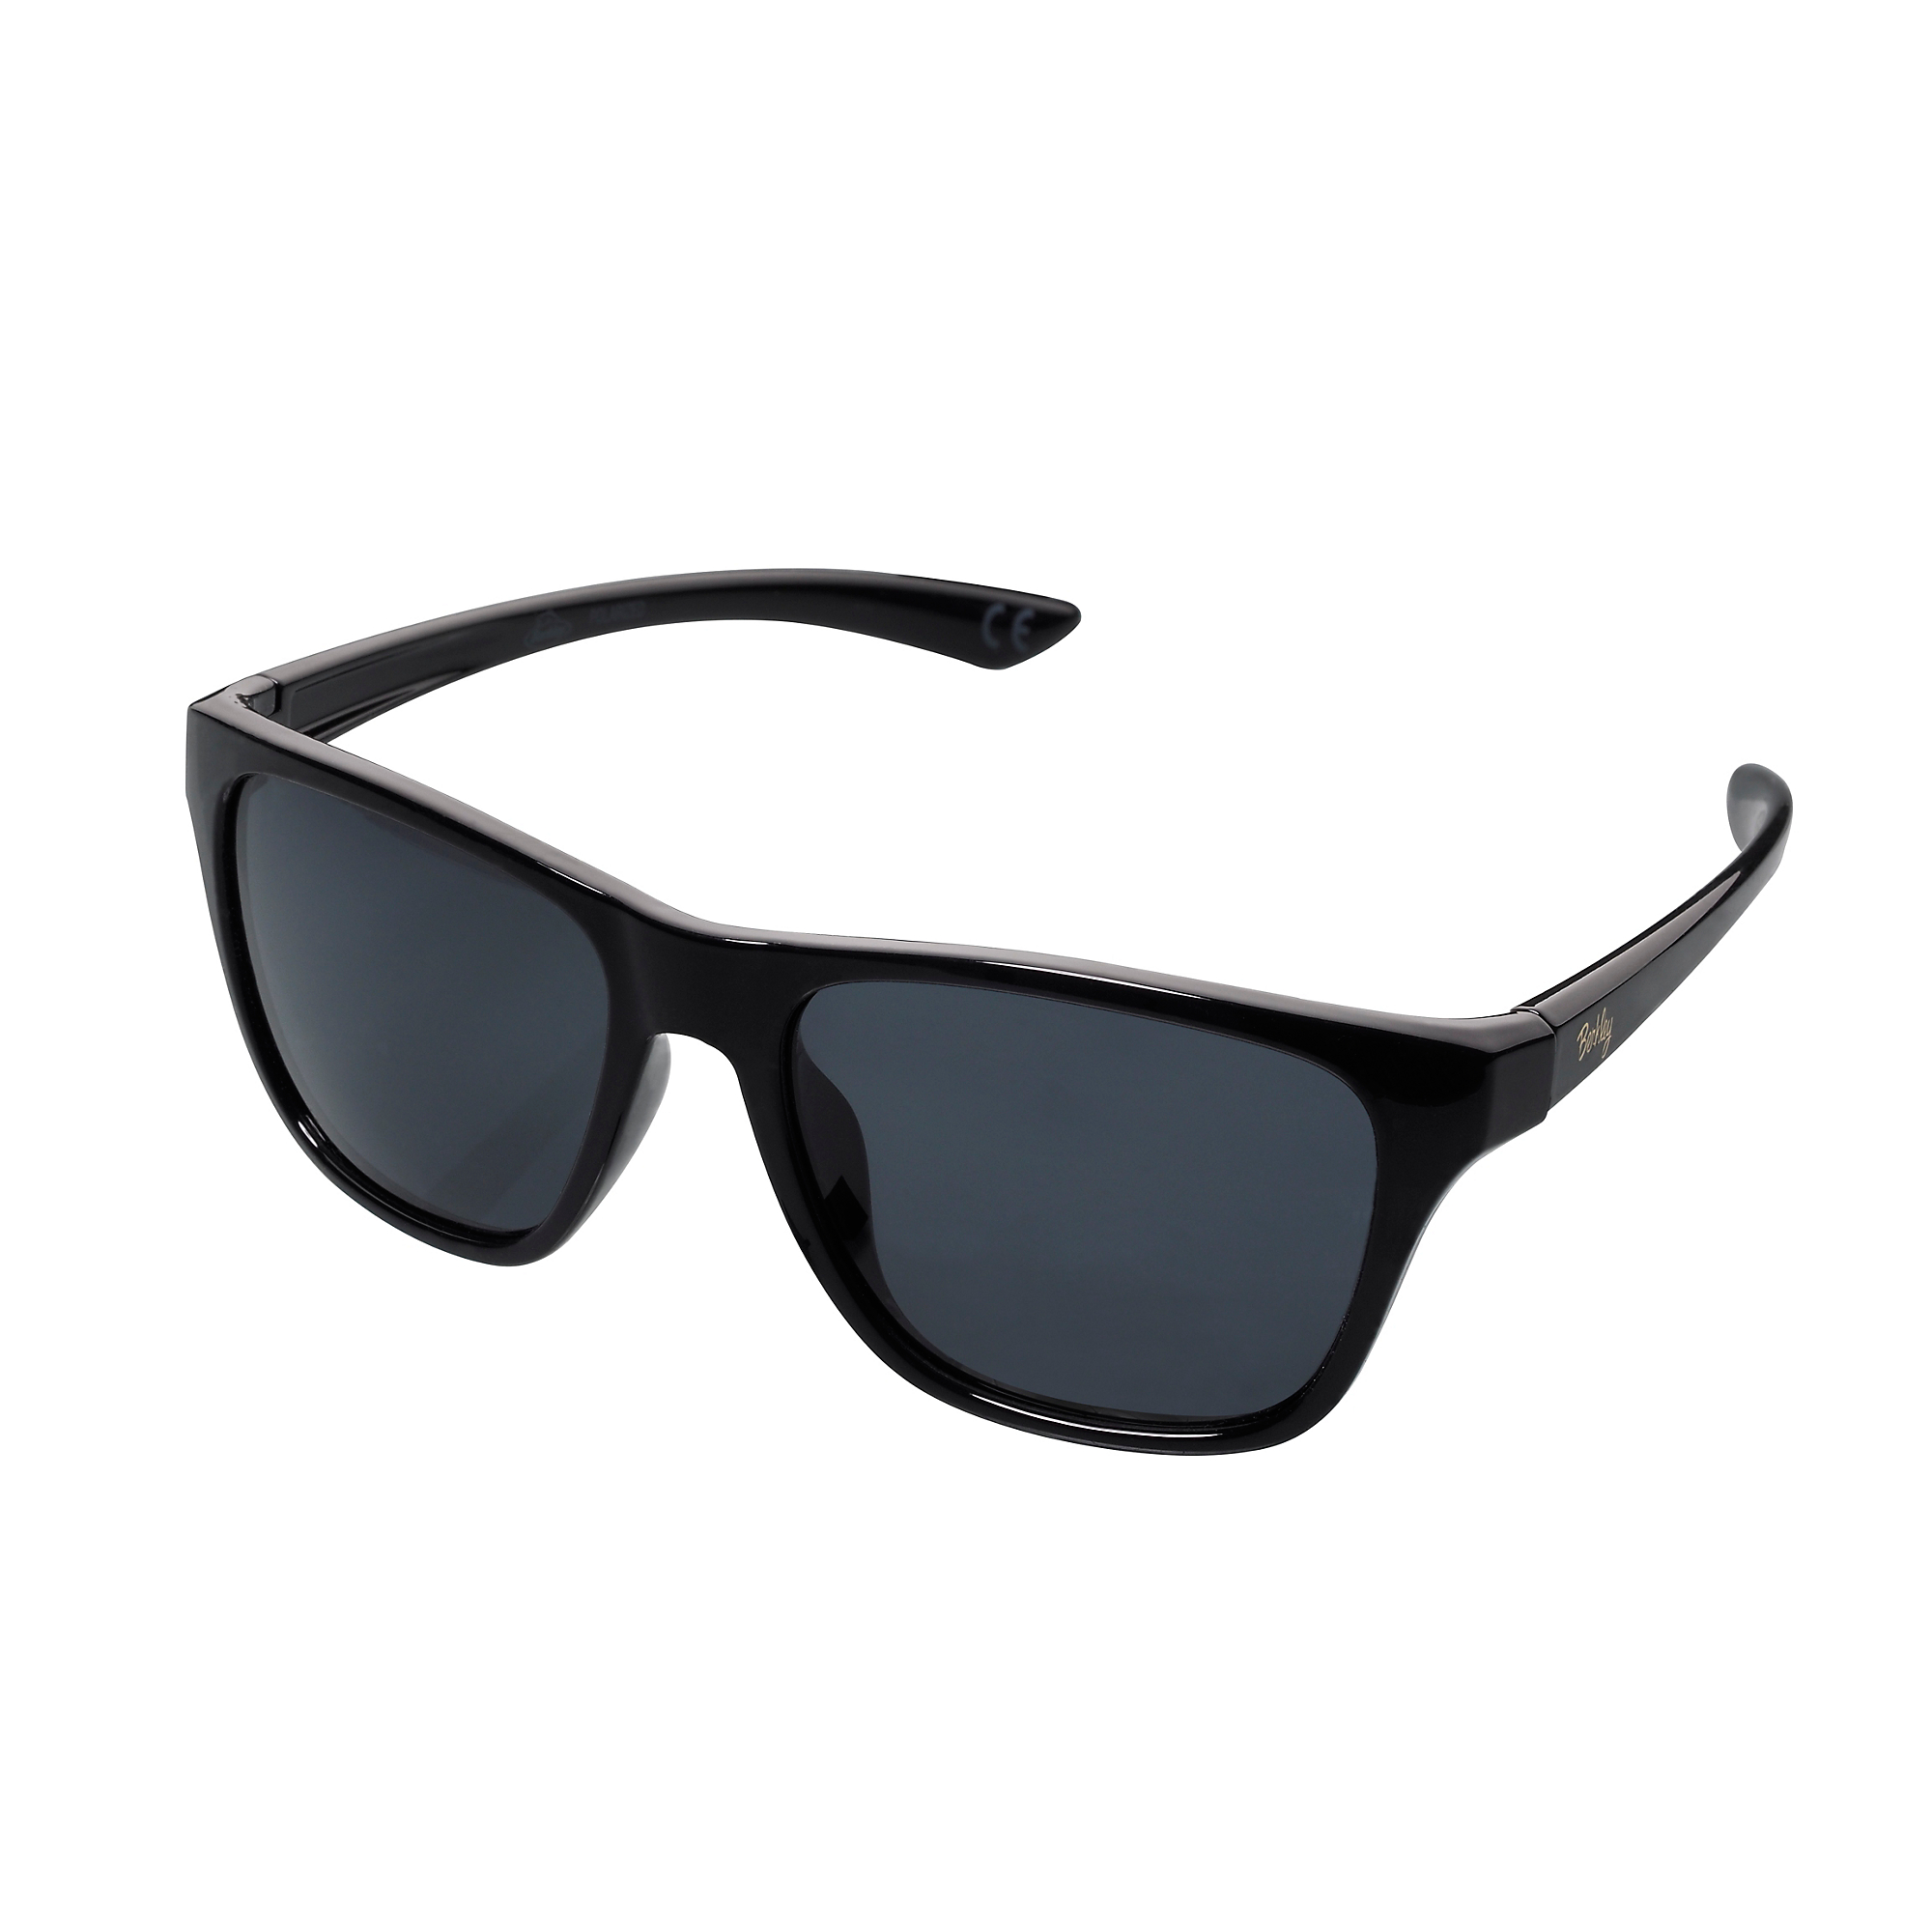 Berkley Urbn Sunglasses - Black